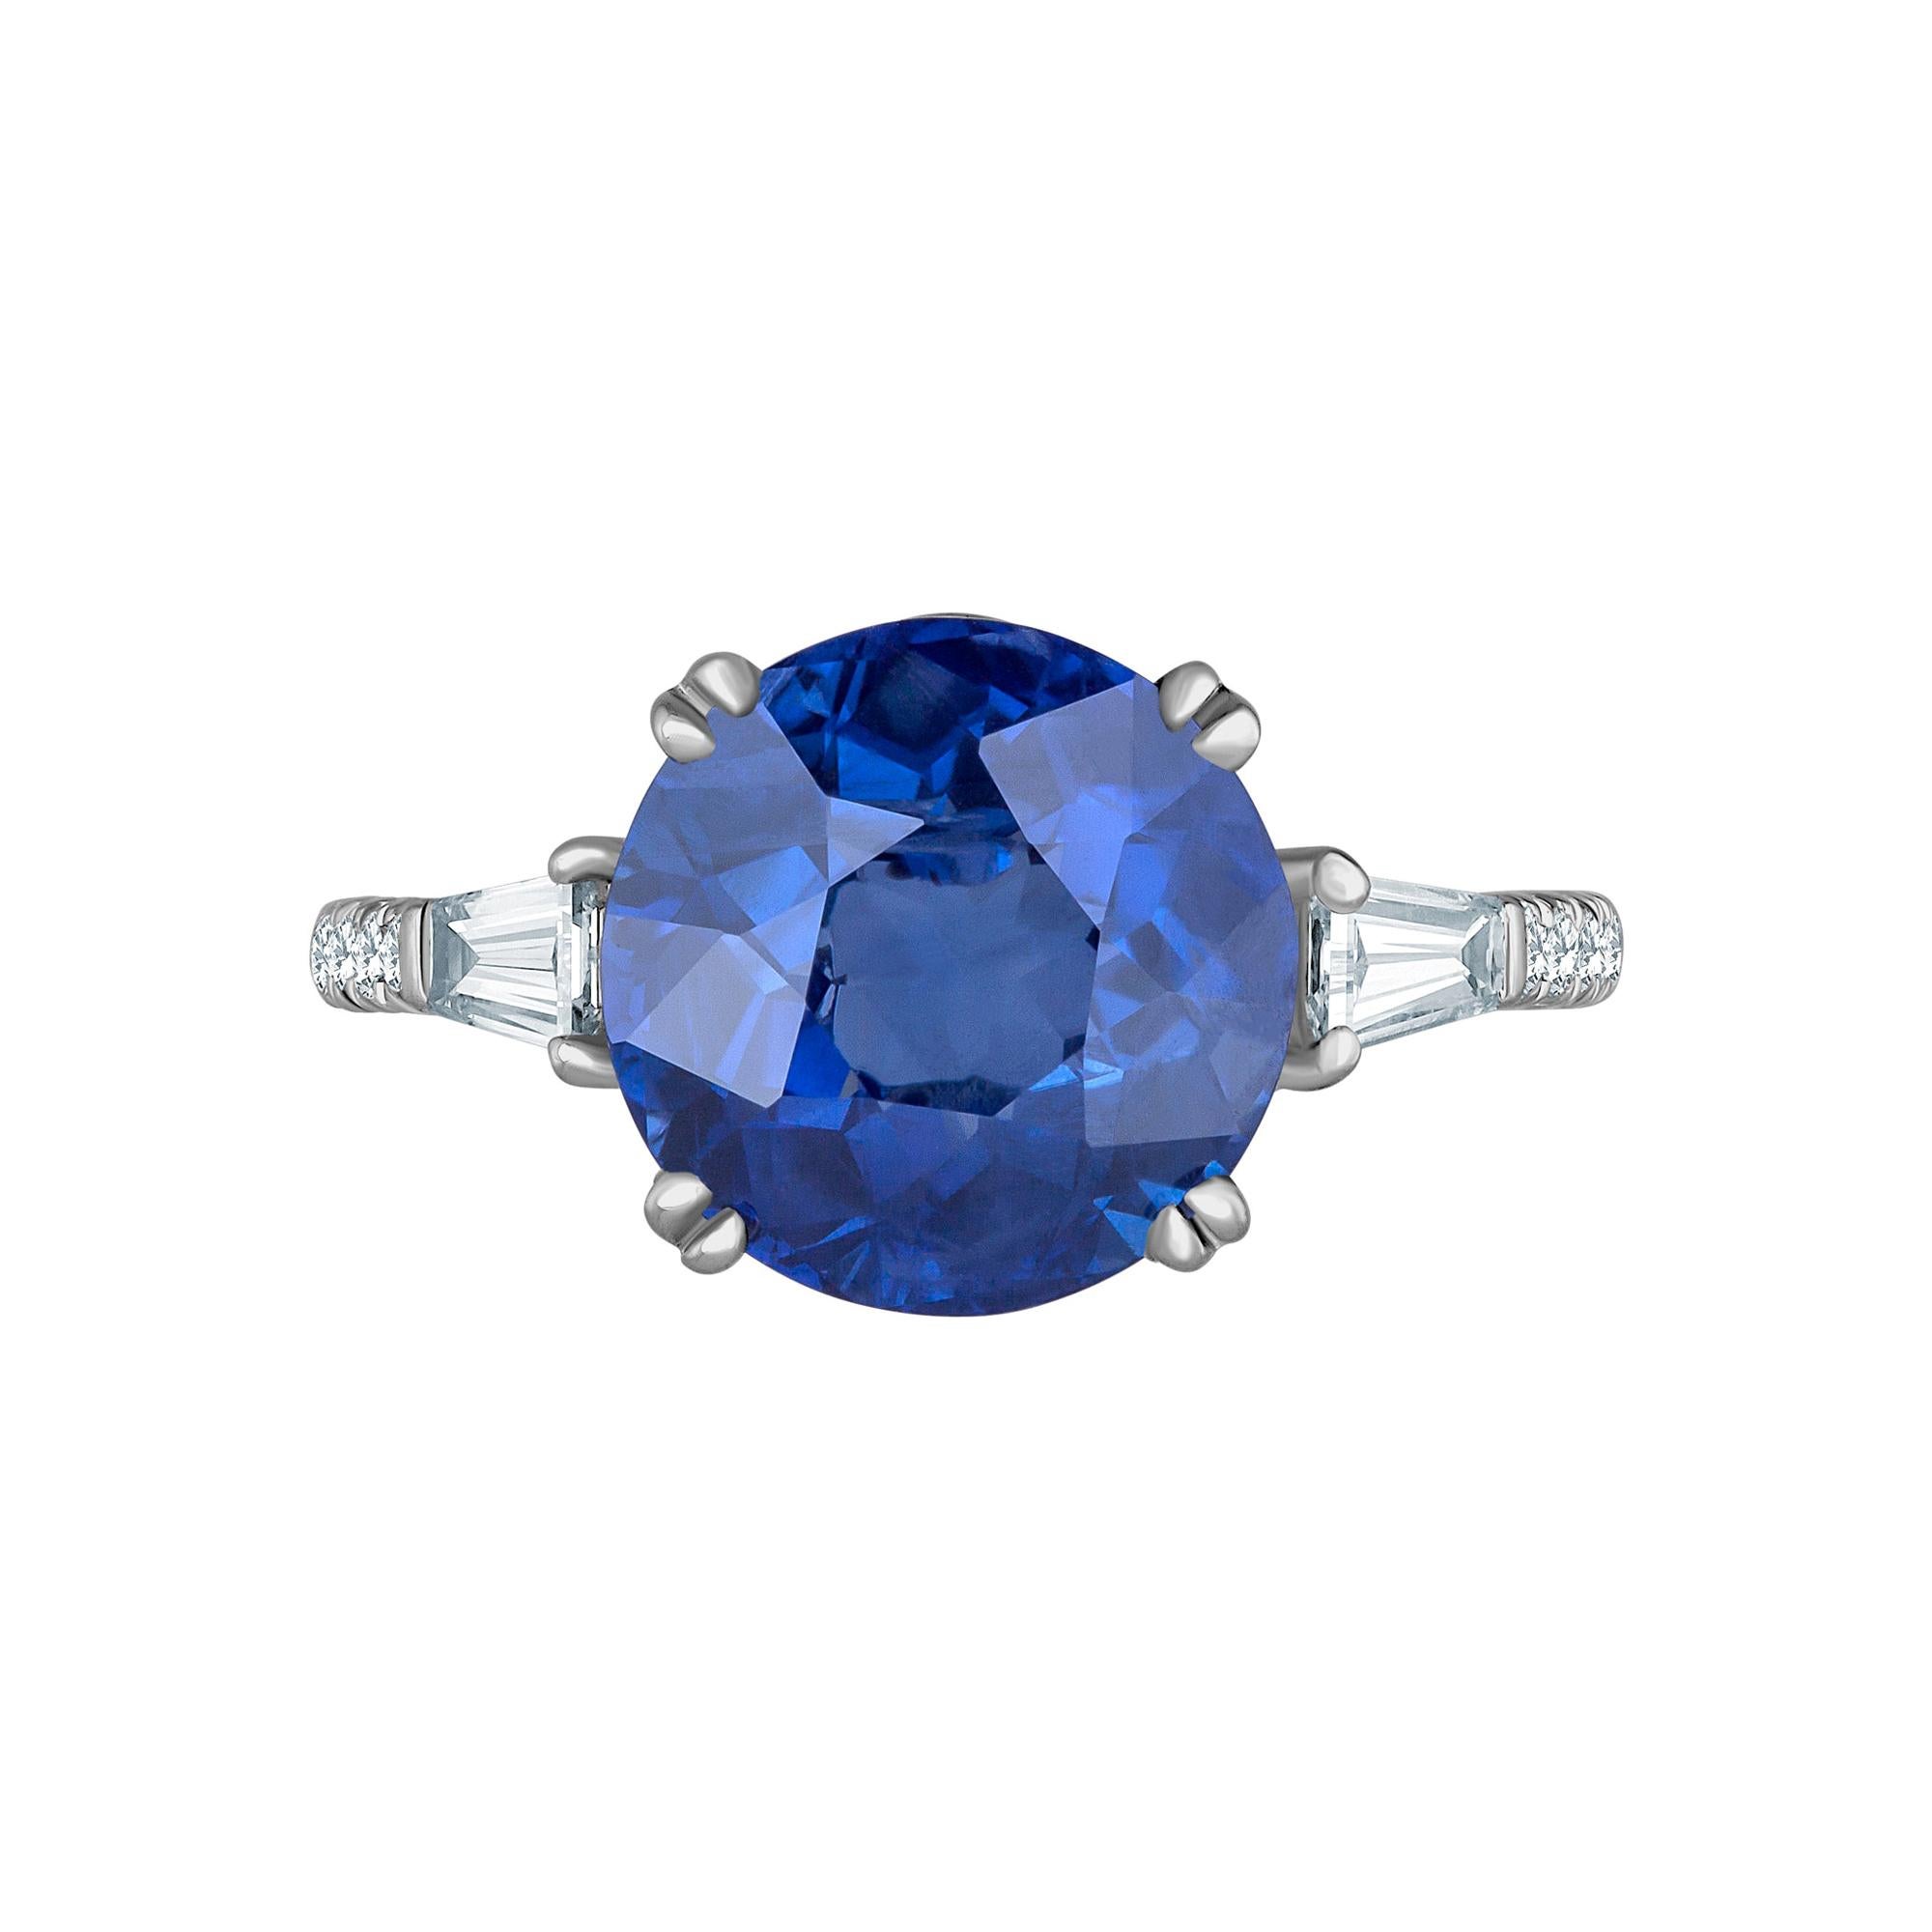 Emilio Jewelry Certified 7.46 Carat Round Sapphire Diamond Ring